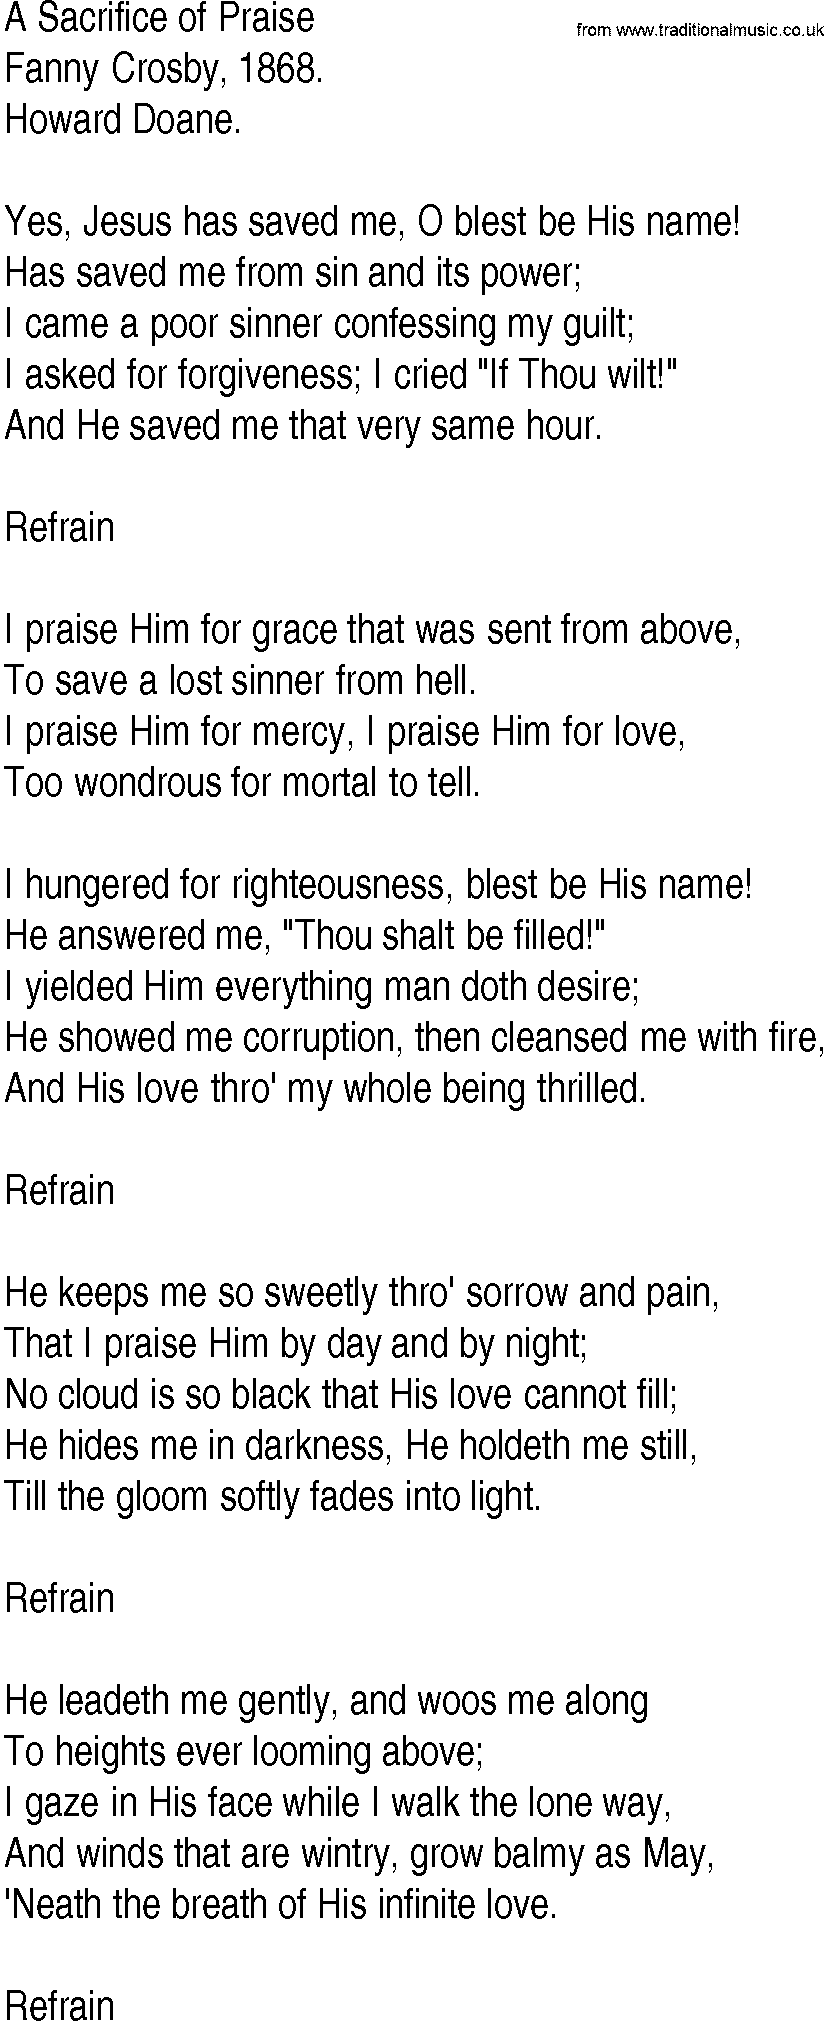 Hymn and Gospel Song: A Sacrifice of Praise by Fanny Crosby lyrics